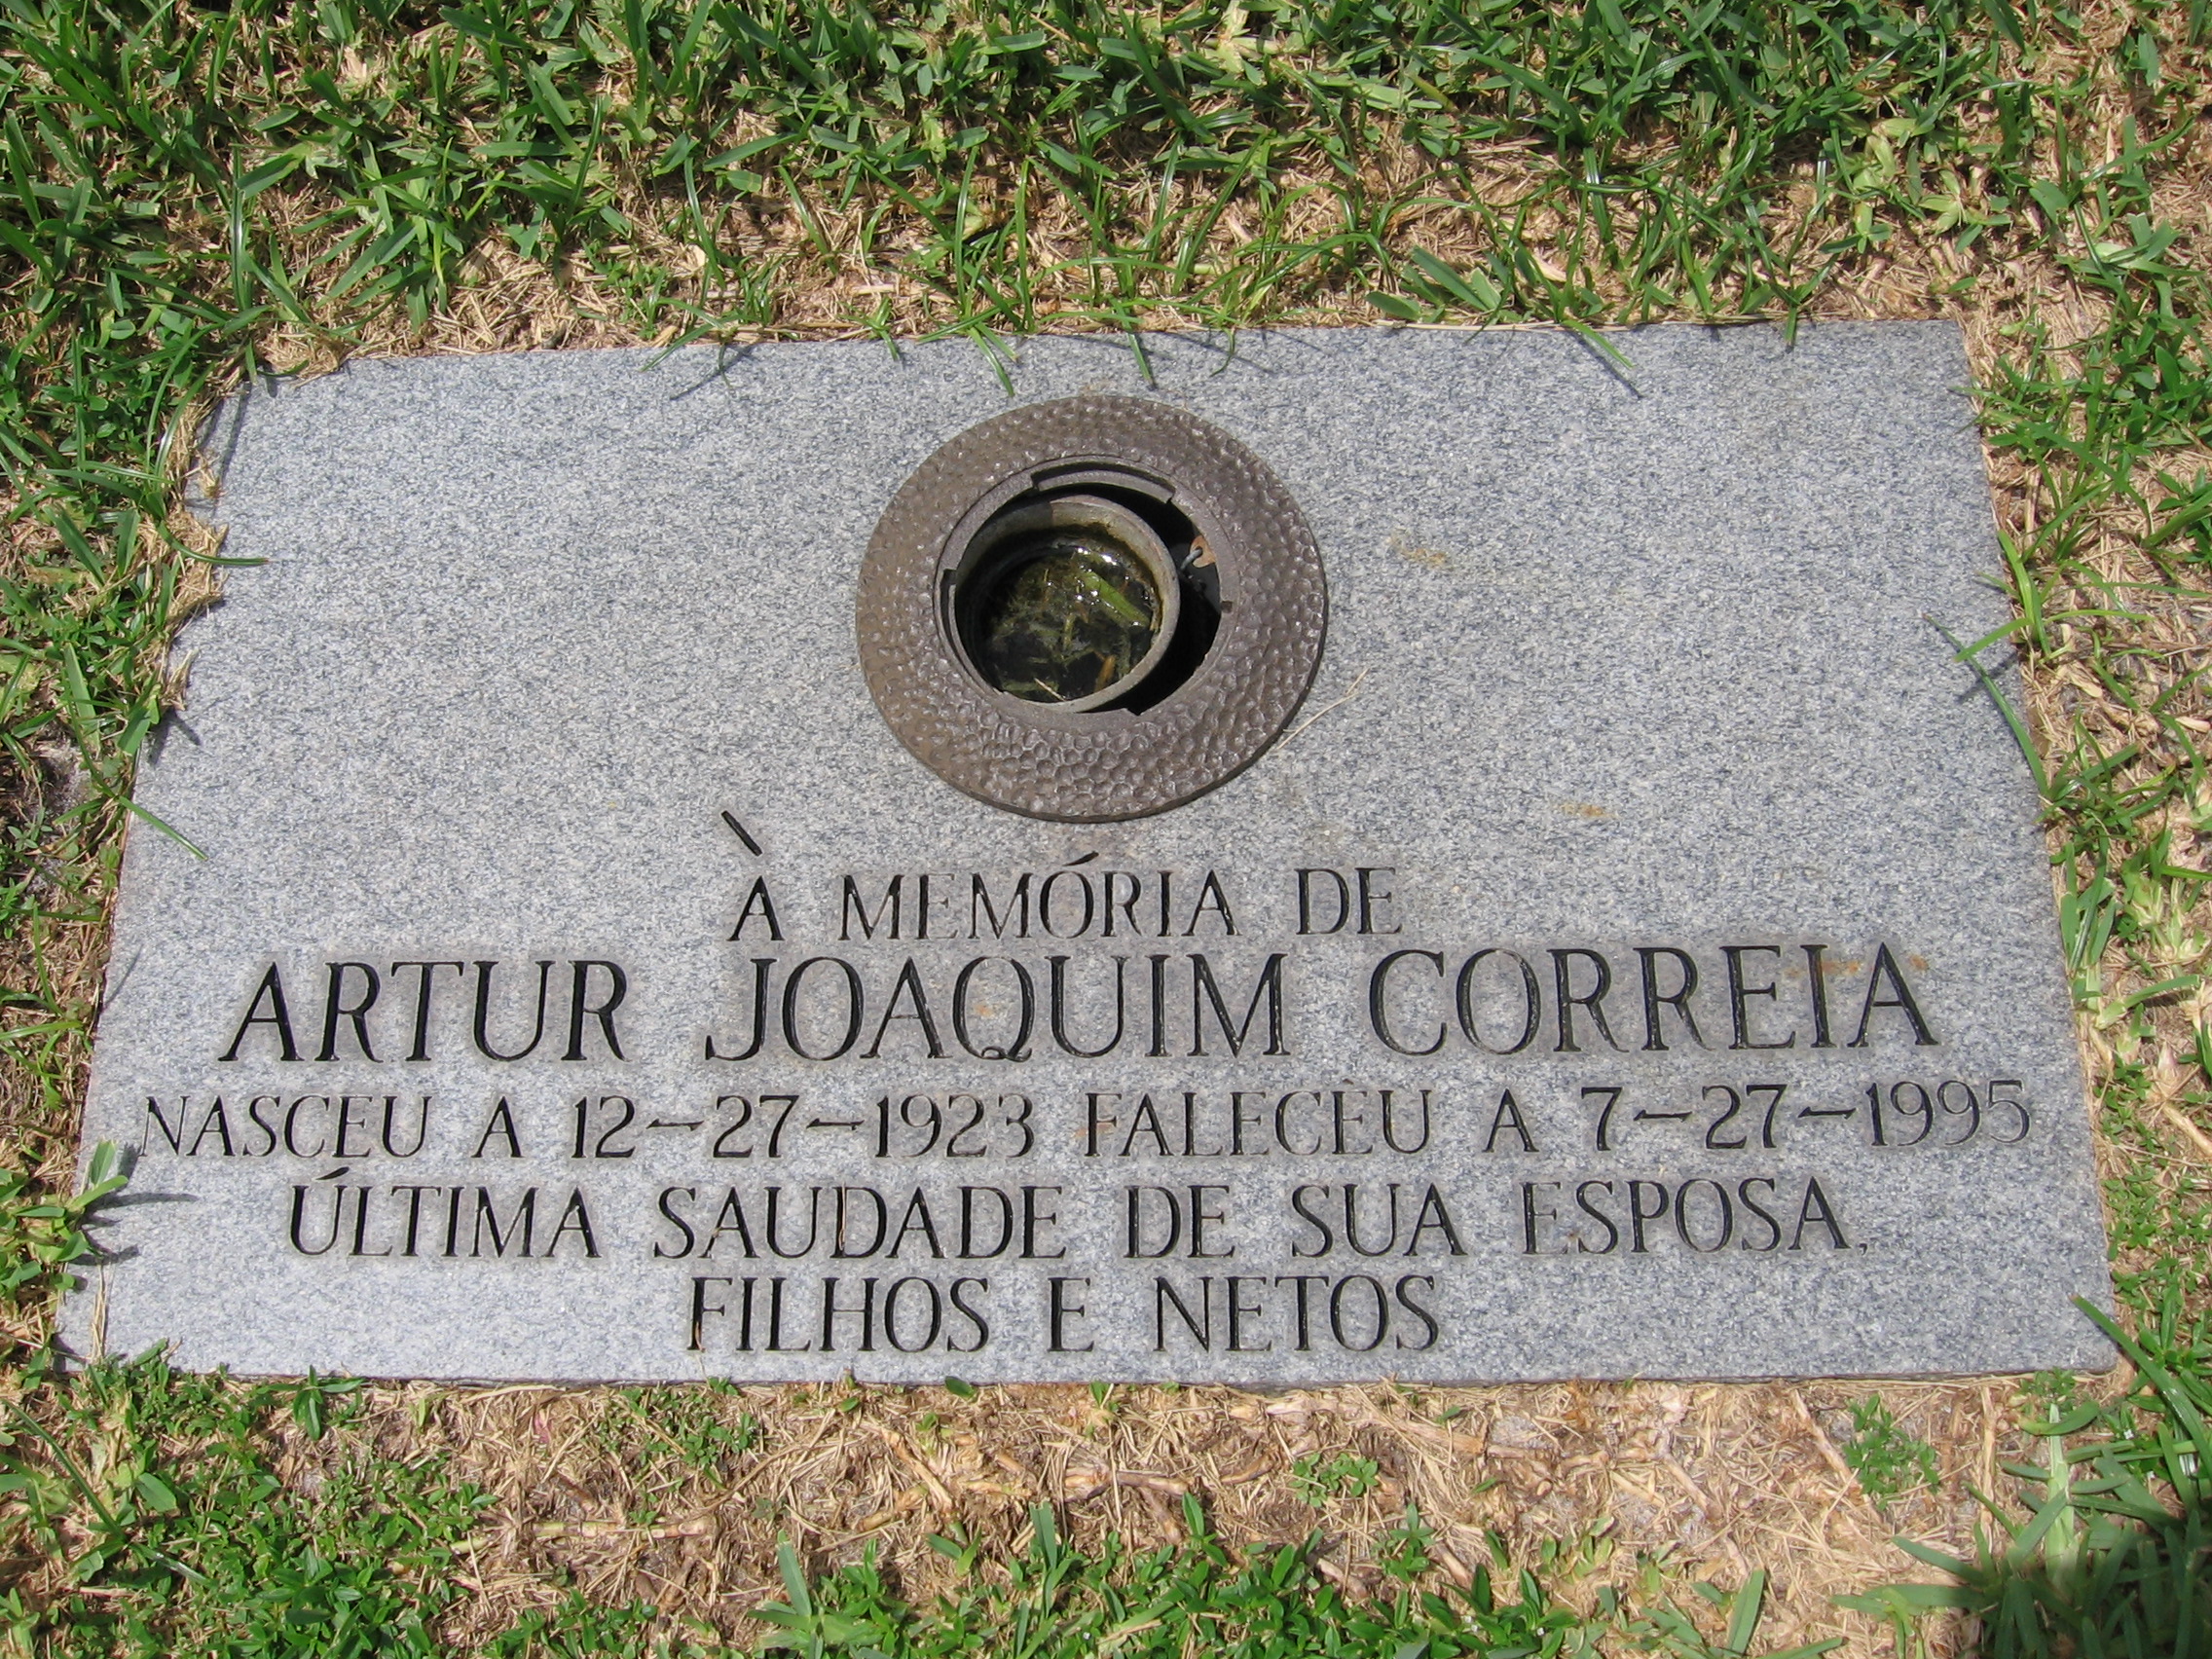 Artur Joaquim Correia